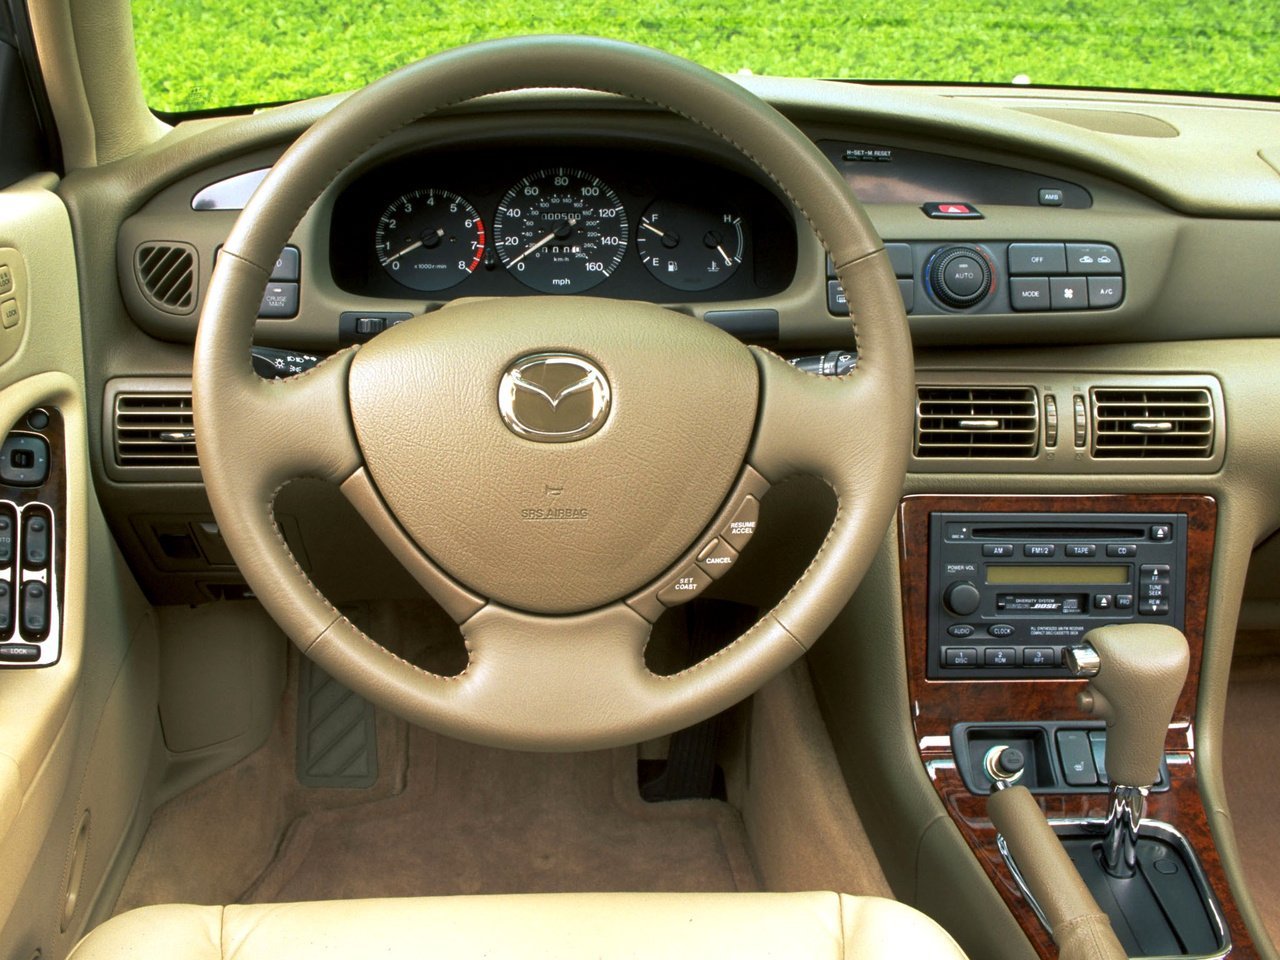 седан Mazda Millenia 1995 - 1999г выпуска модификация 2.0 AT (160 л.с.)